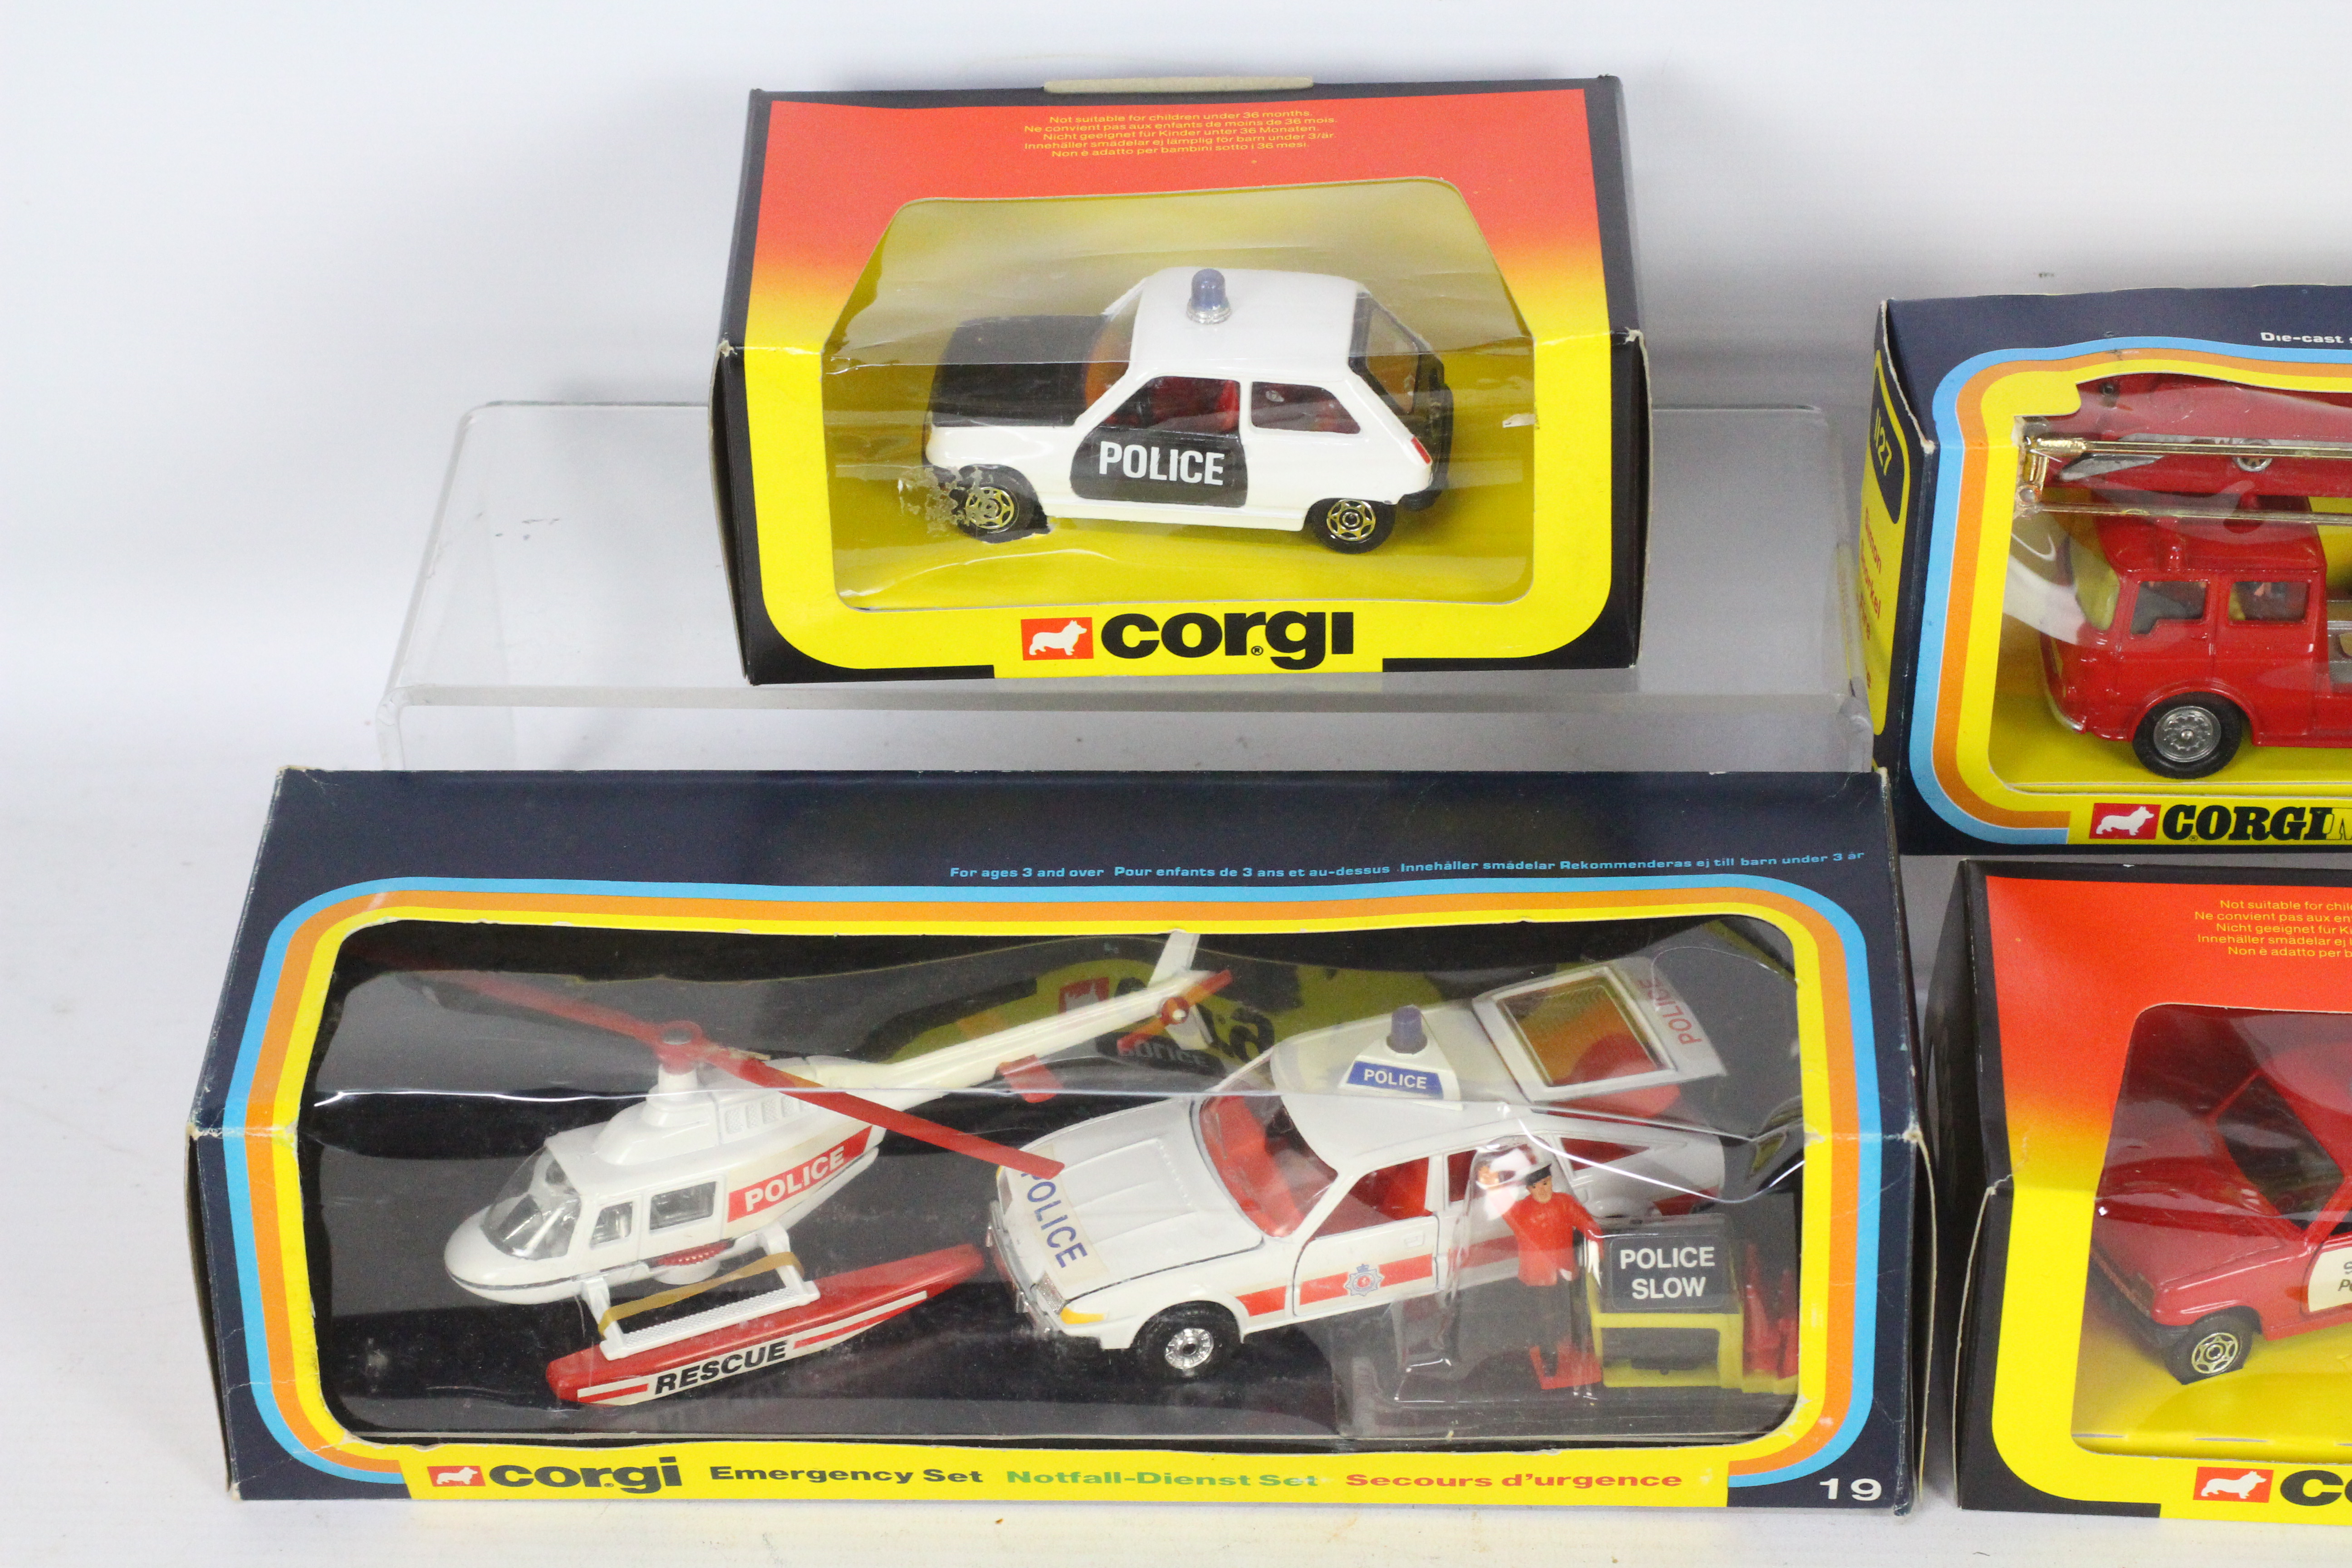 Corgi - Five boxed diecast model vehicles from Corgi. - Image 2 of 3